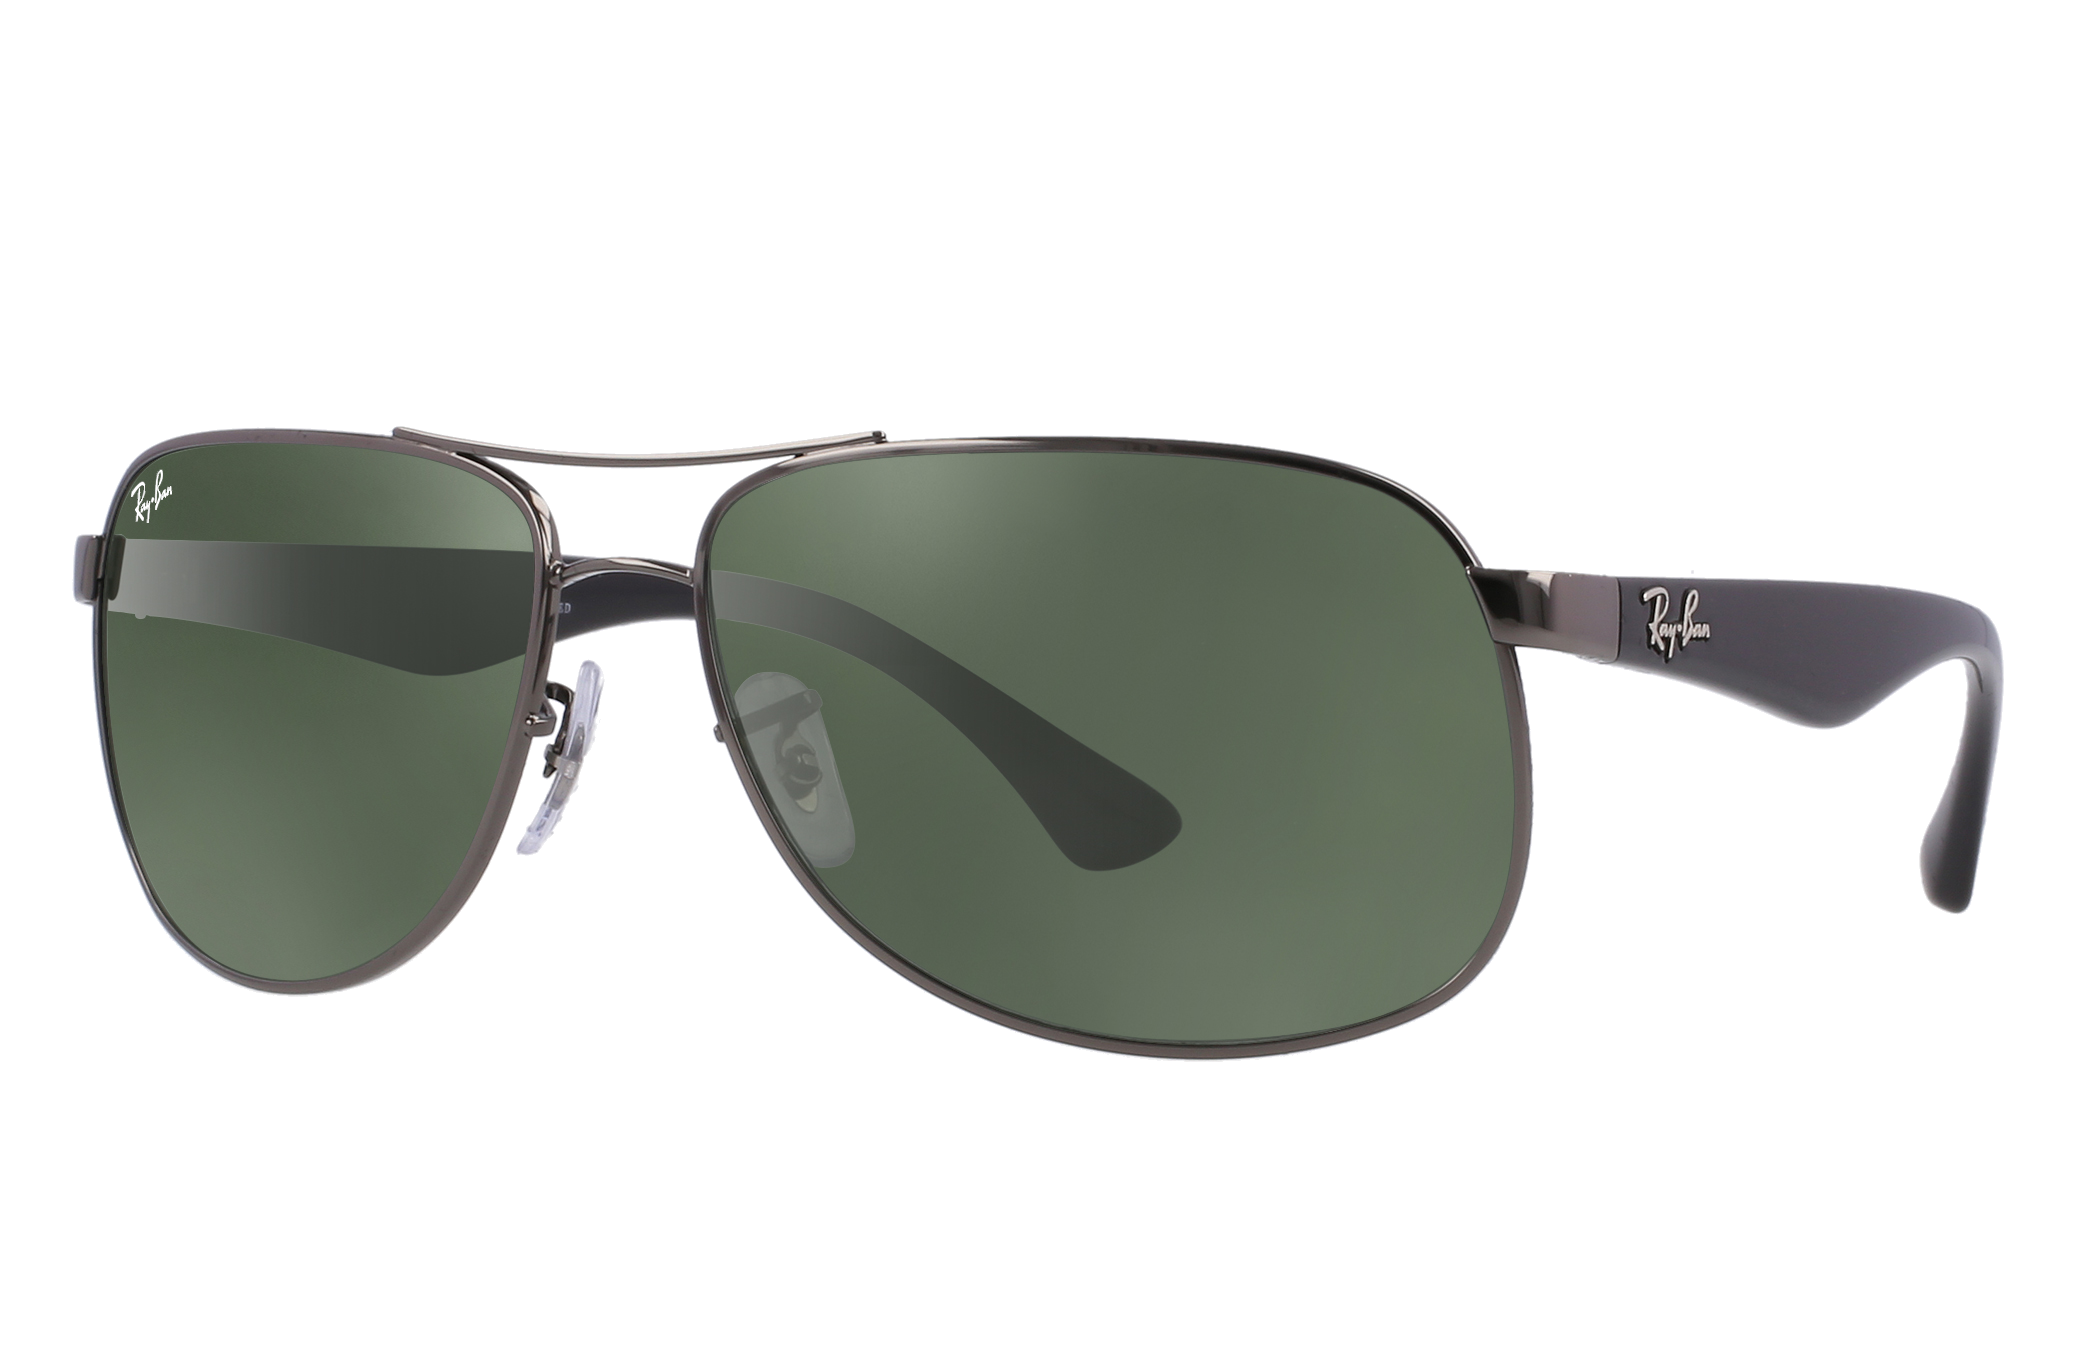 ray ban 3502 sunglasses